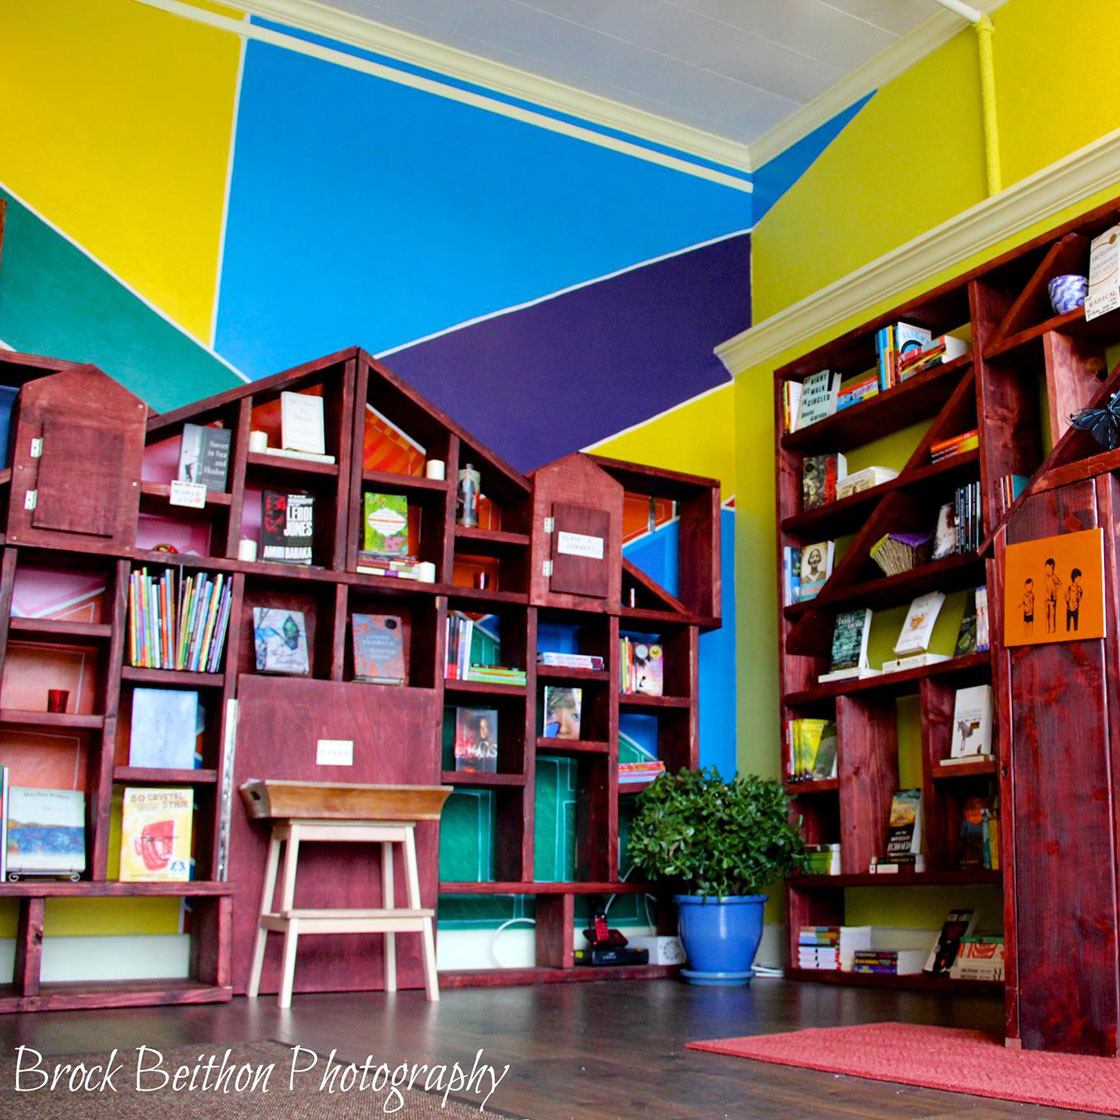 A decorative bookshelf